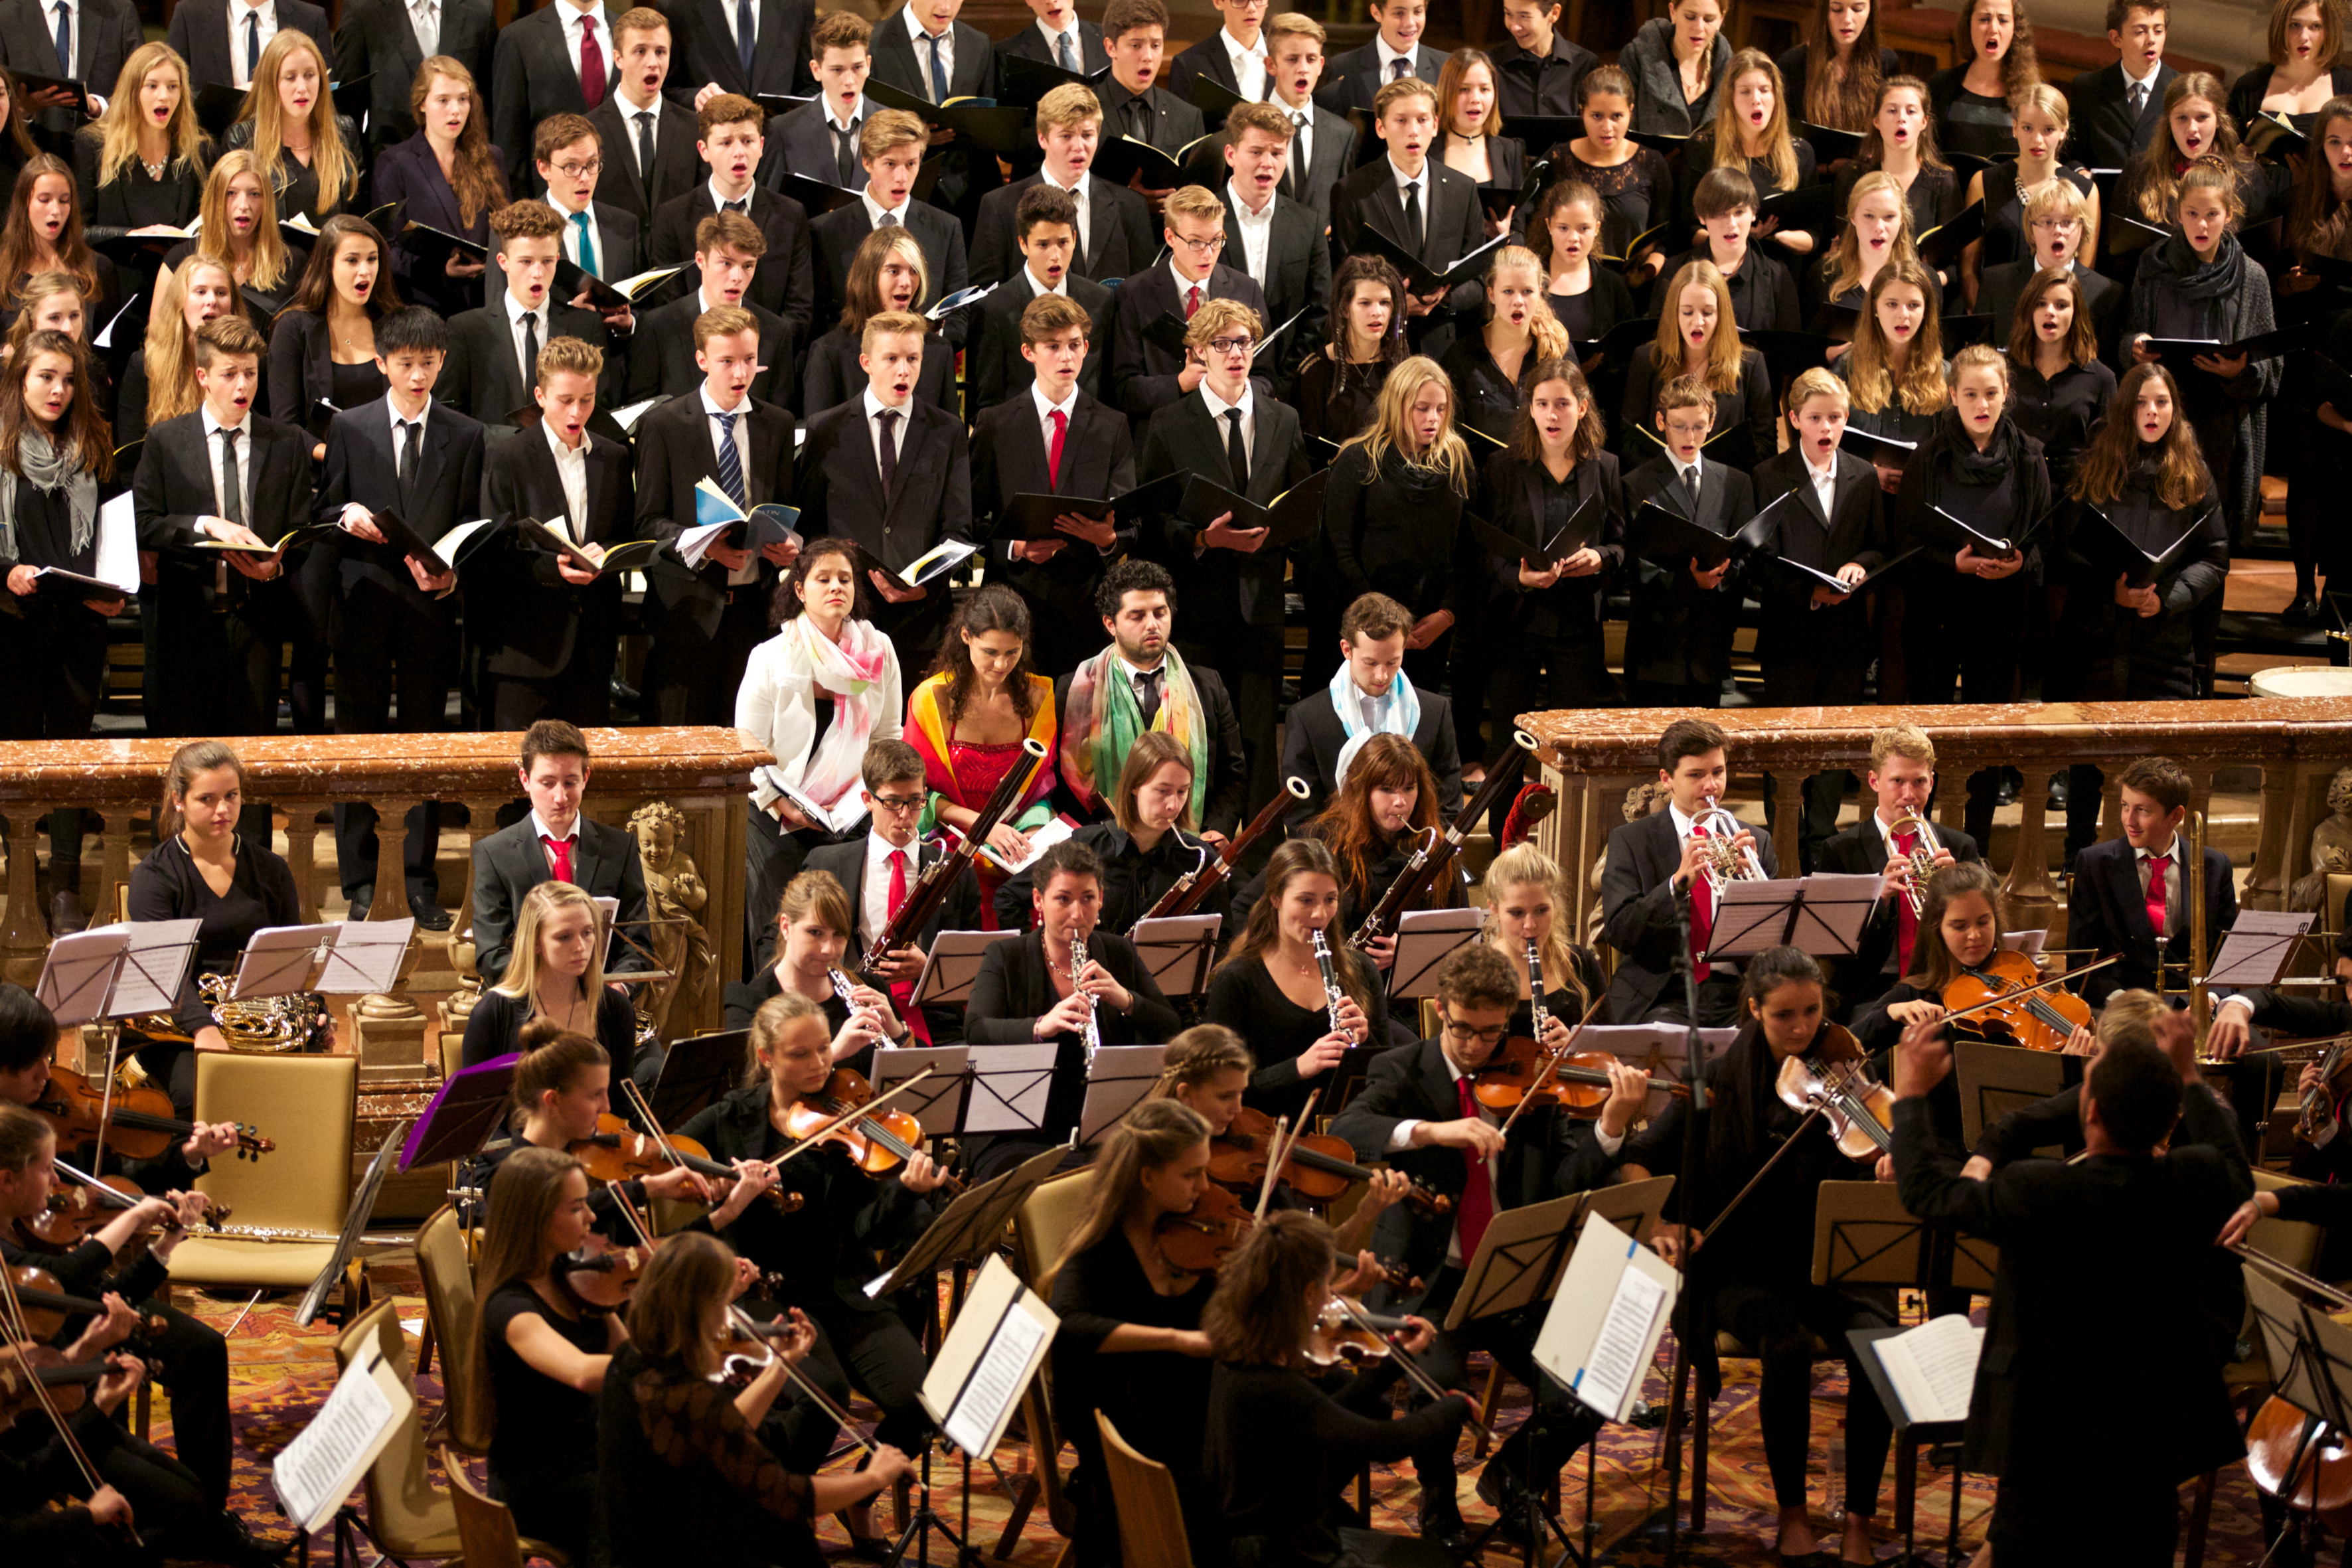 Konzert im Salzburger Dom. Video Promotion für Opera Concert for Peace im Salzburger Dom am 2.Oktober 2015